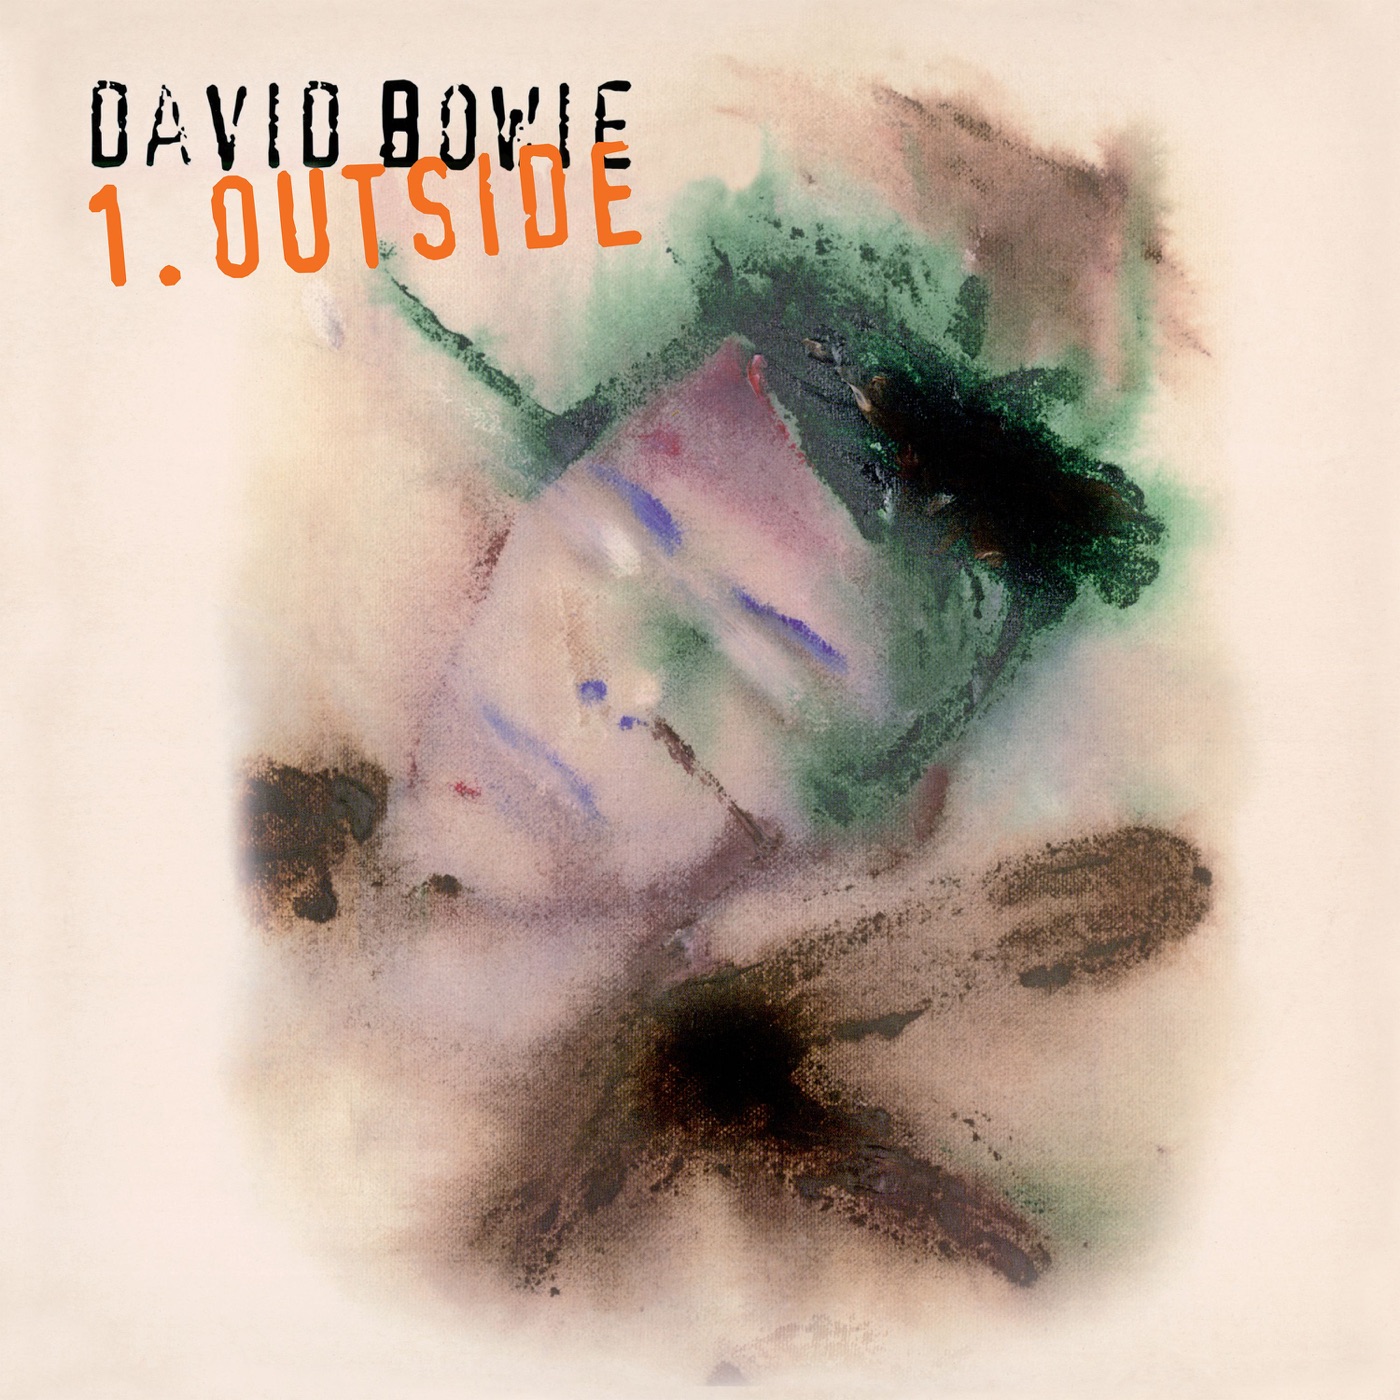 Strangers When We Meet by David Bowie